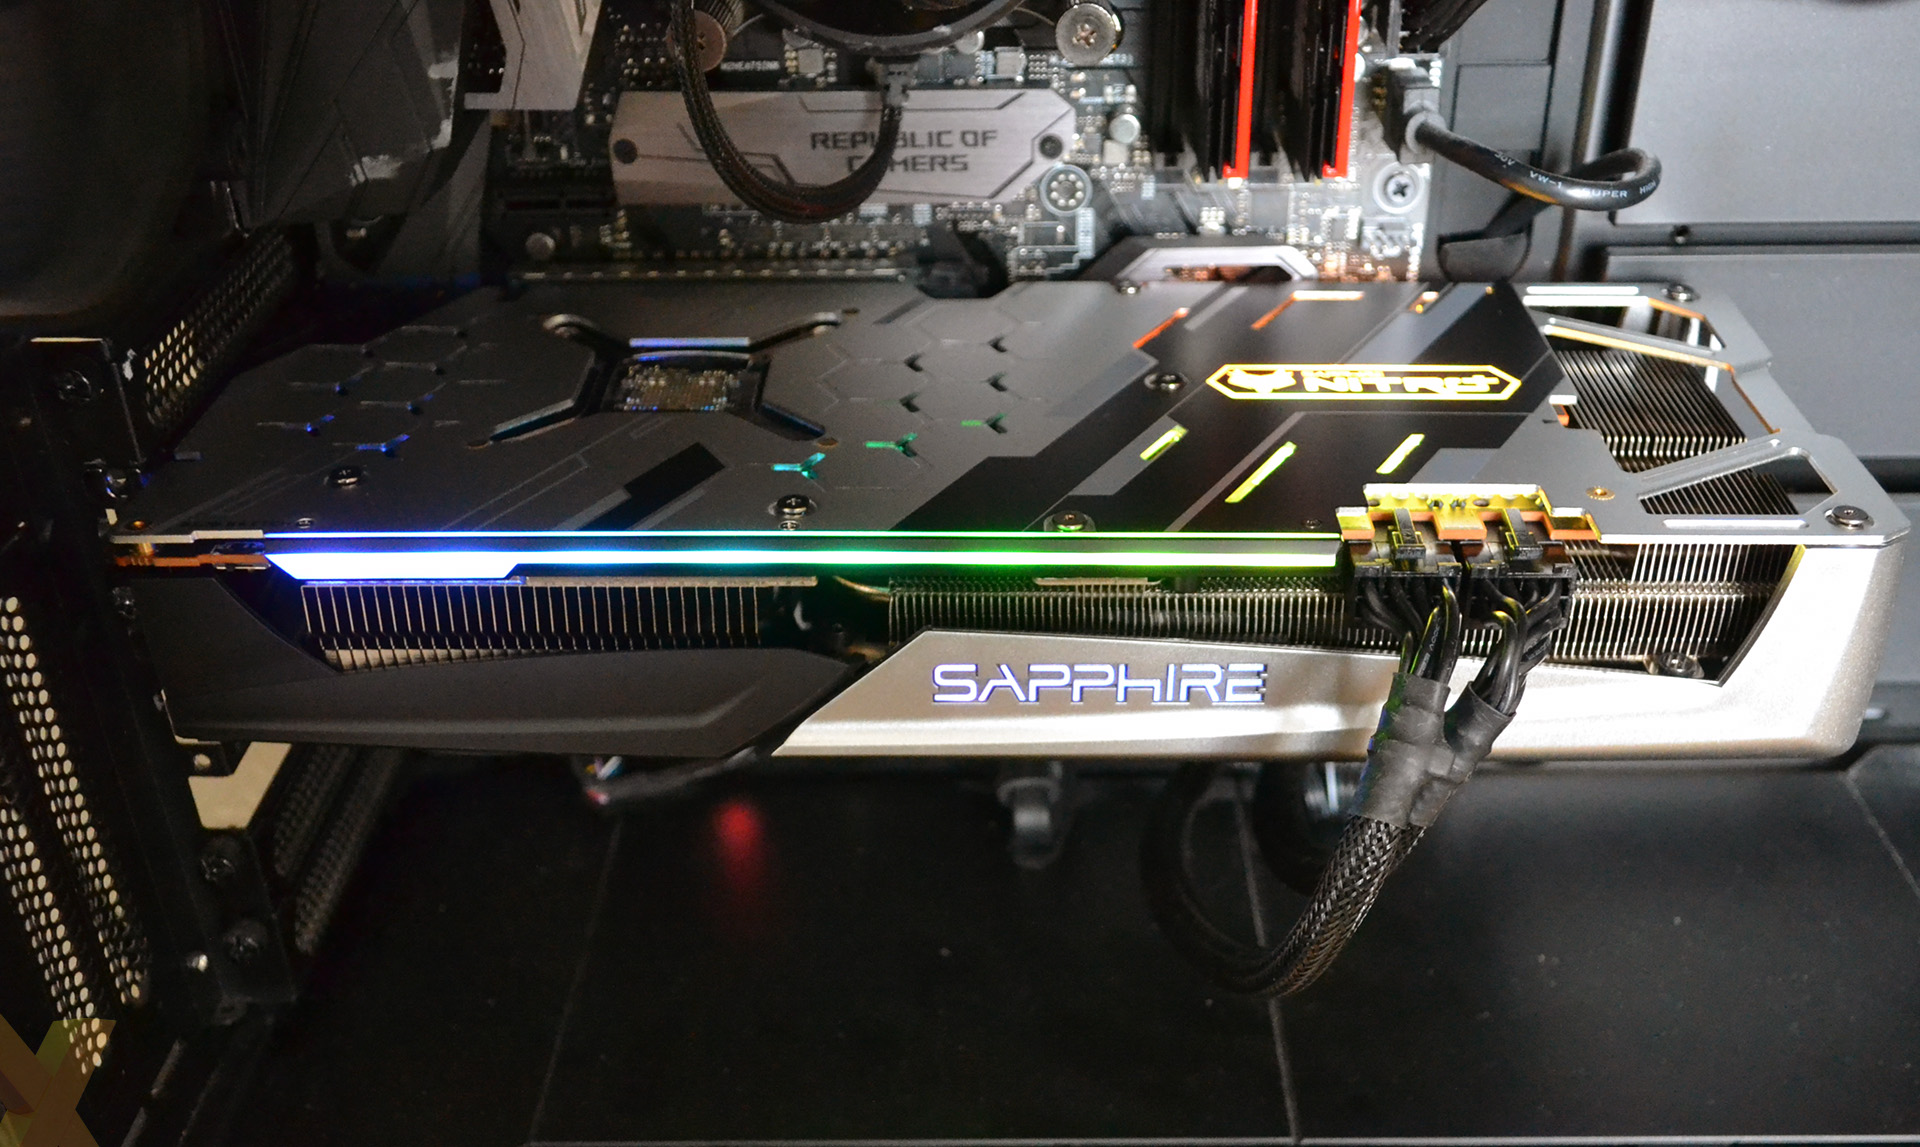 Review: Sapphire Radeon RX 5700 XT Nitro+ - Graphics - HEXUS.net